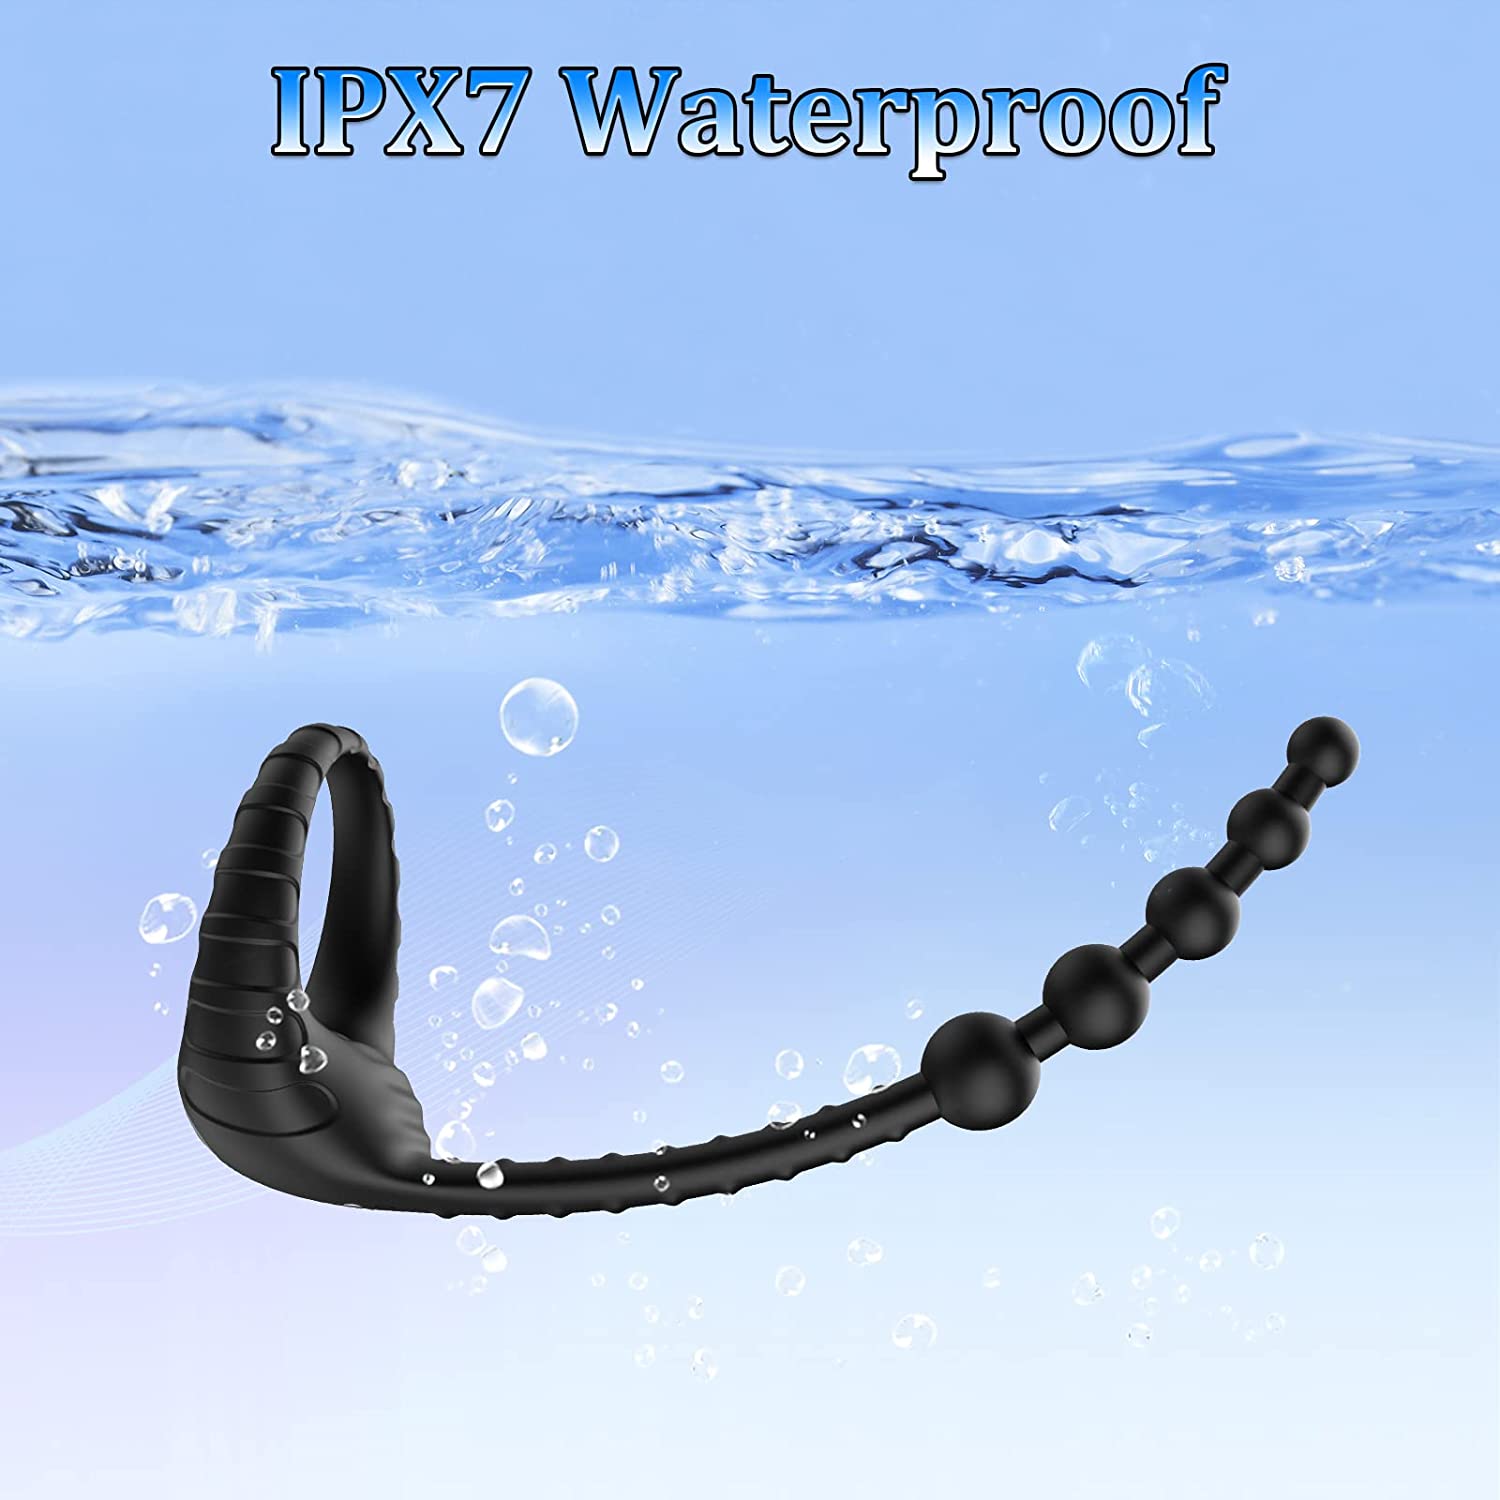 Prostata y anillo vibrador estimulador a prueba de agua Foto 7174729-1.jpg